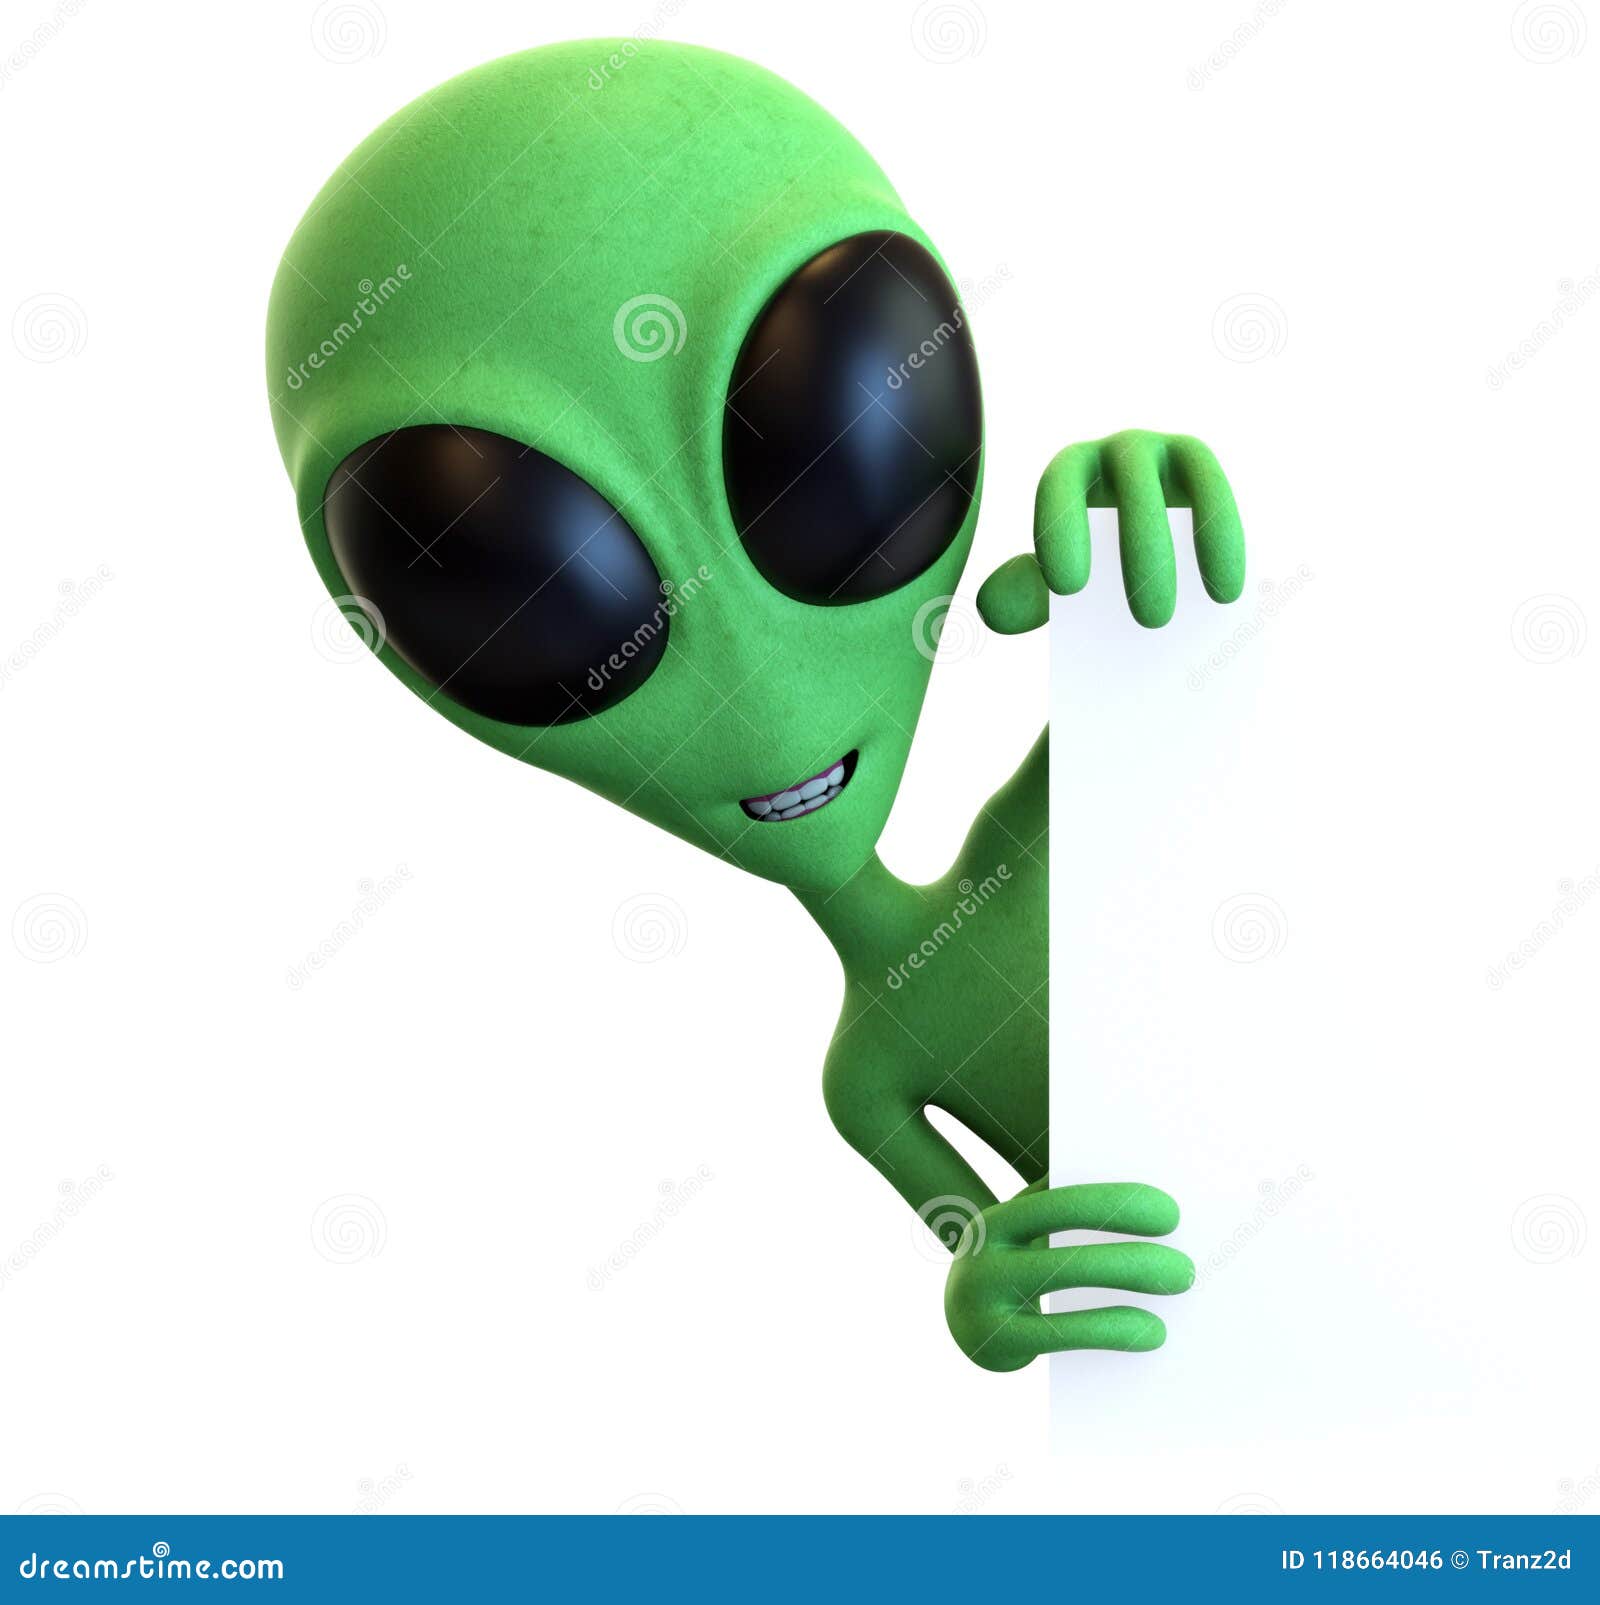 Download HD Little Green Alien Two Thumbs Up - Cute Alien Cartoon  Transparent PNG Image 